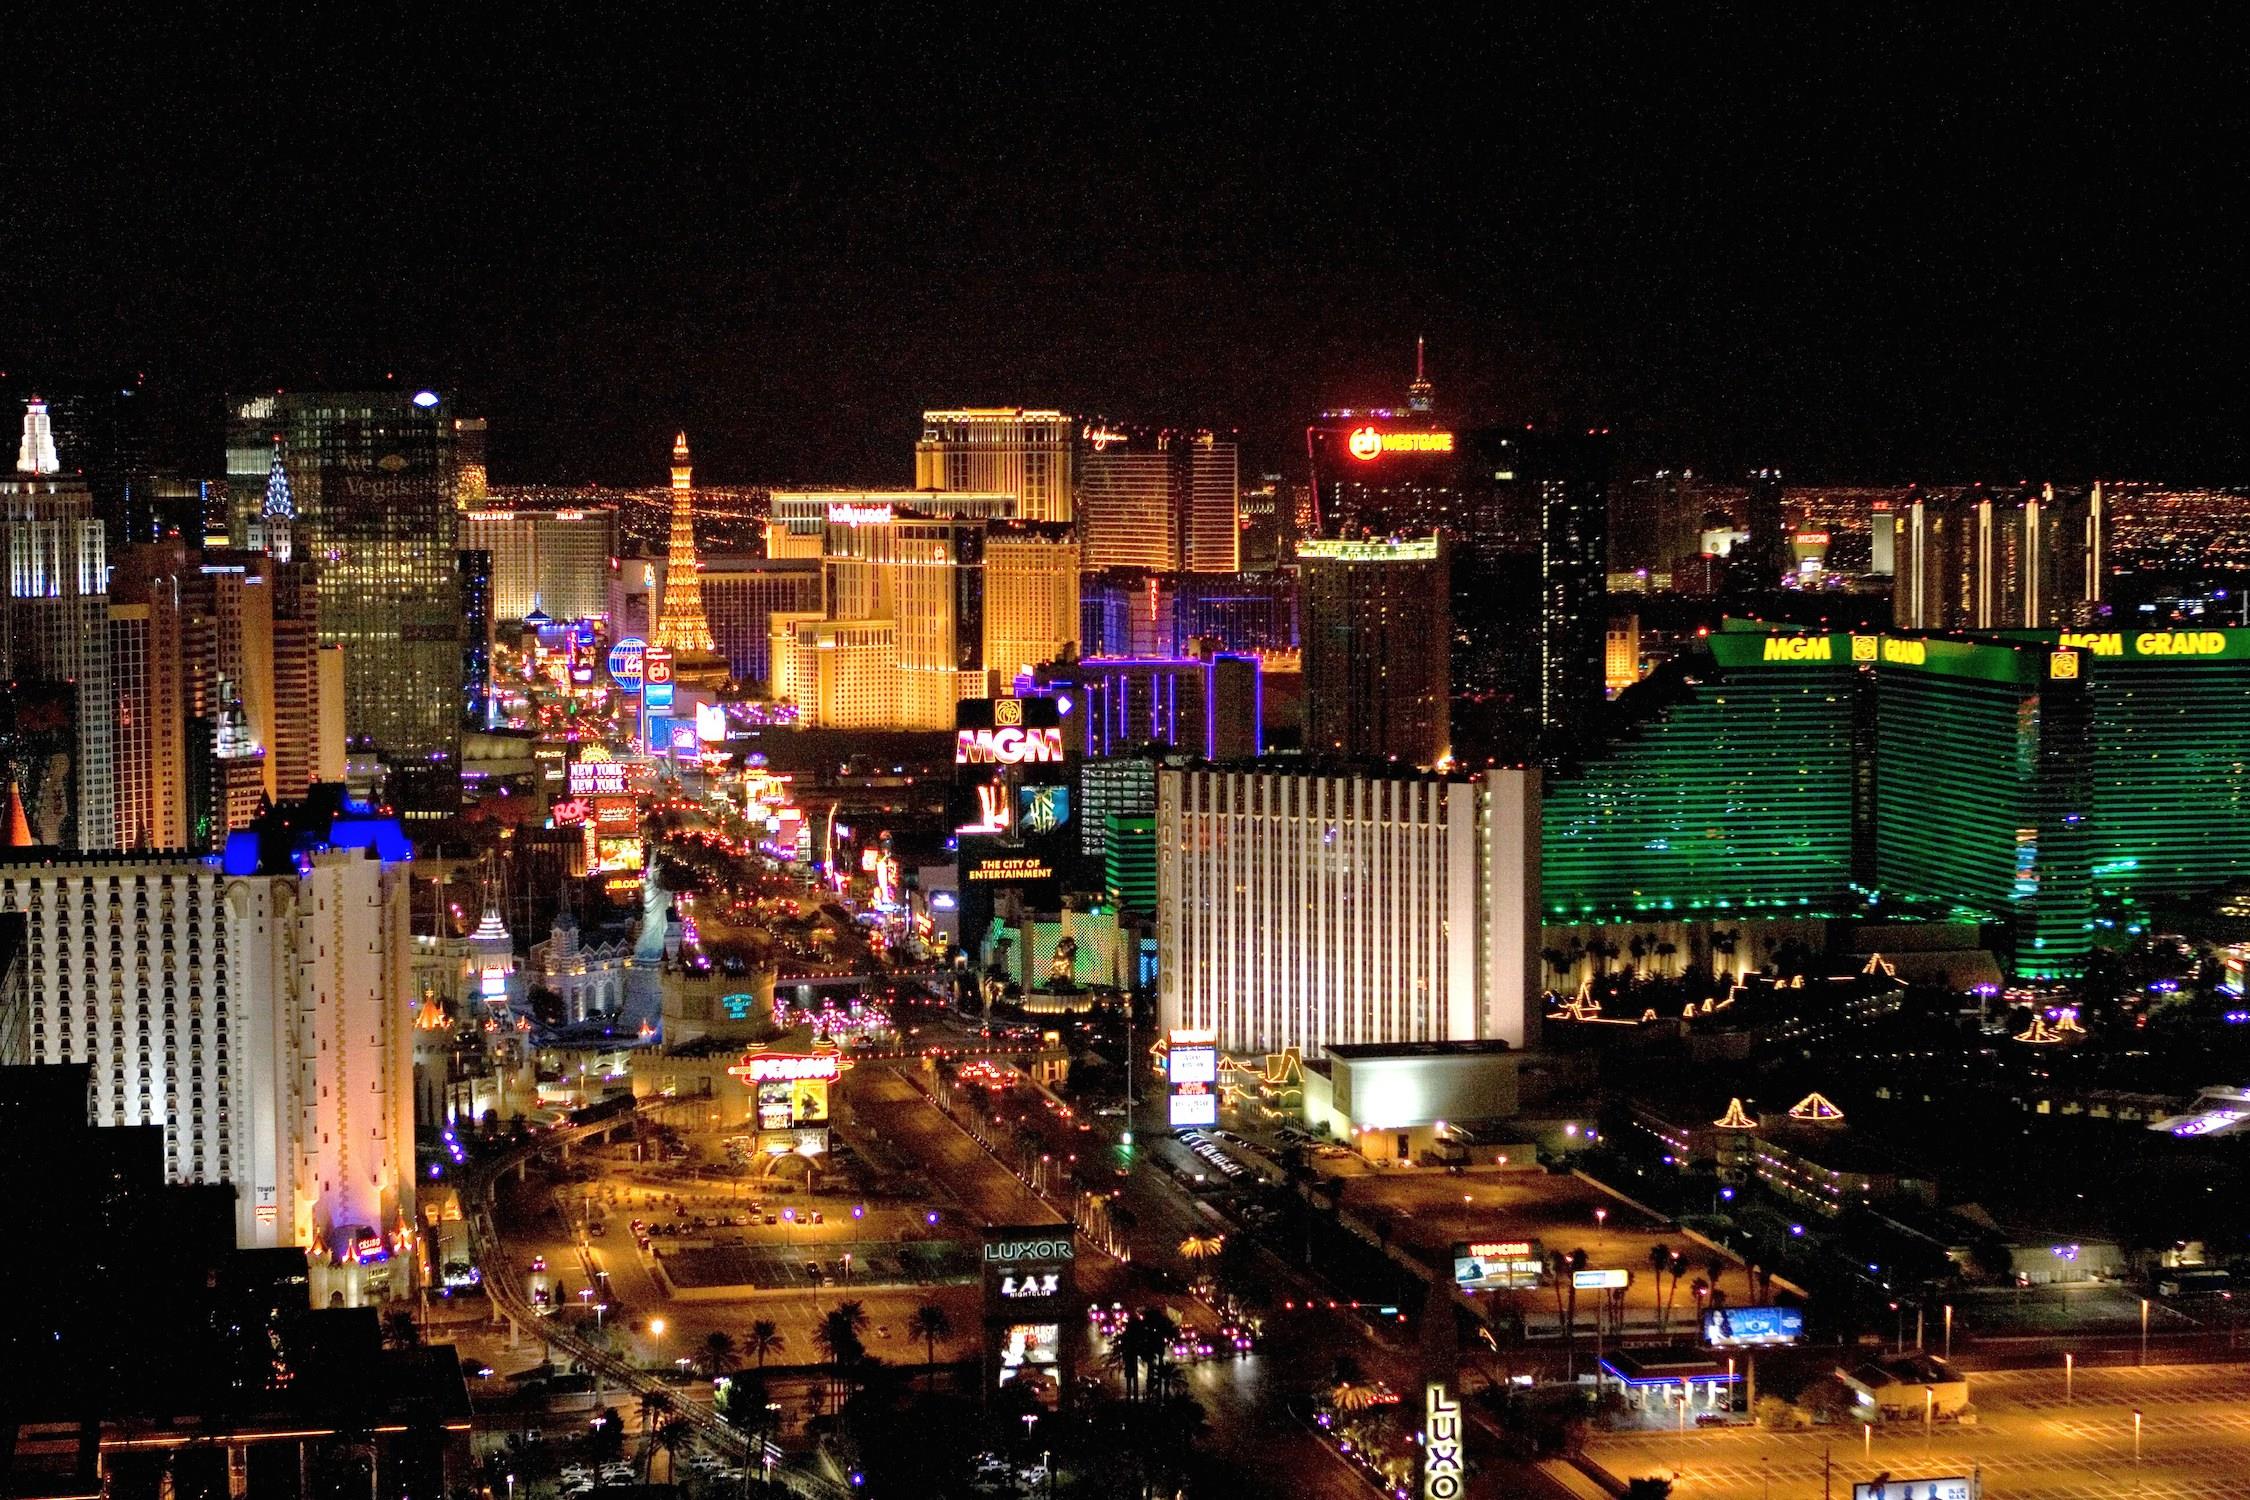 Las Vegas kasyno hazard kluby